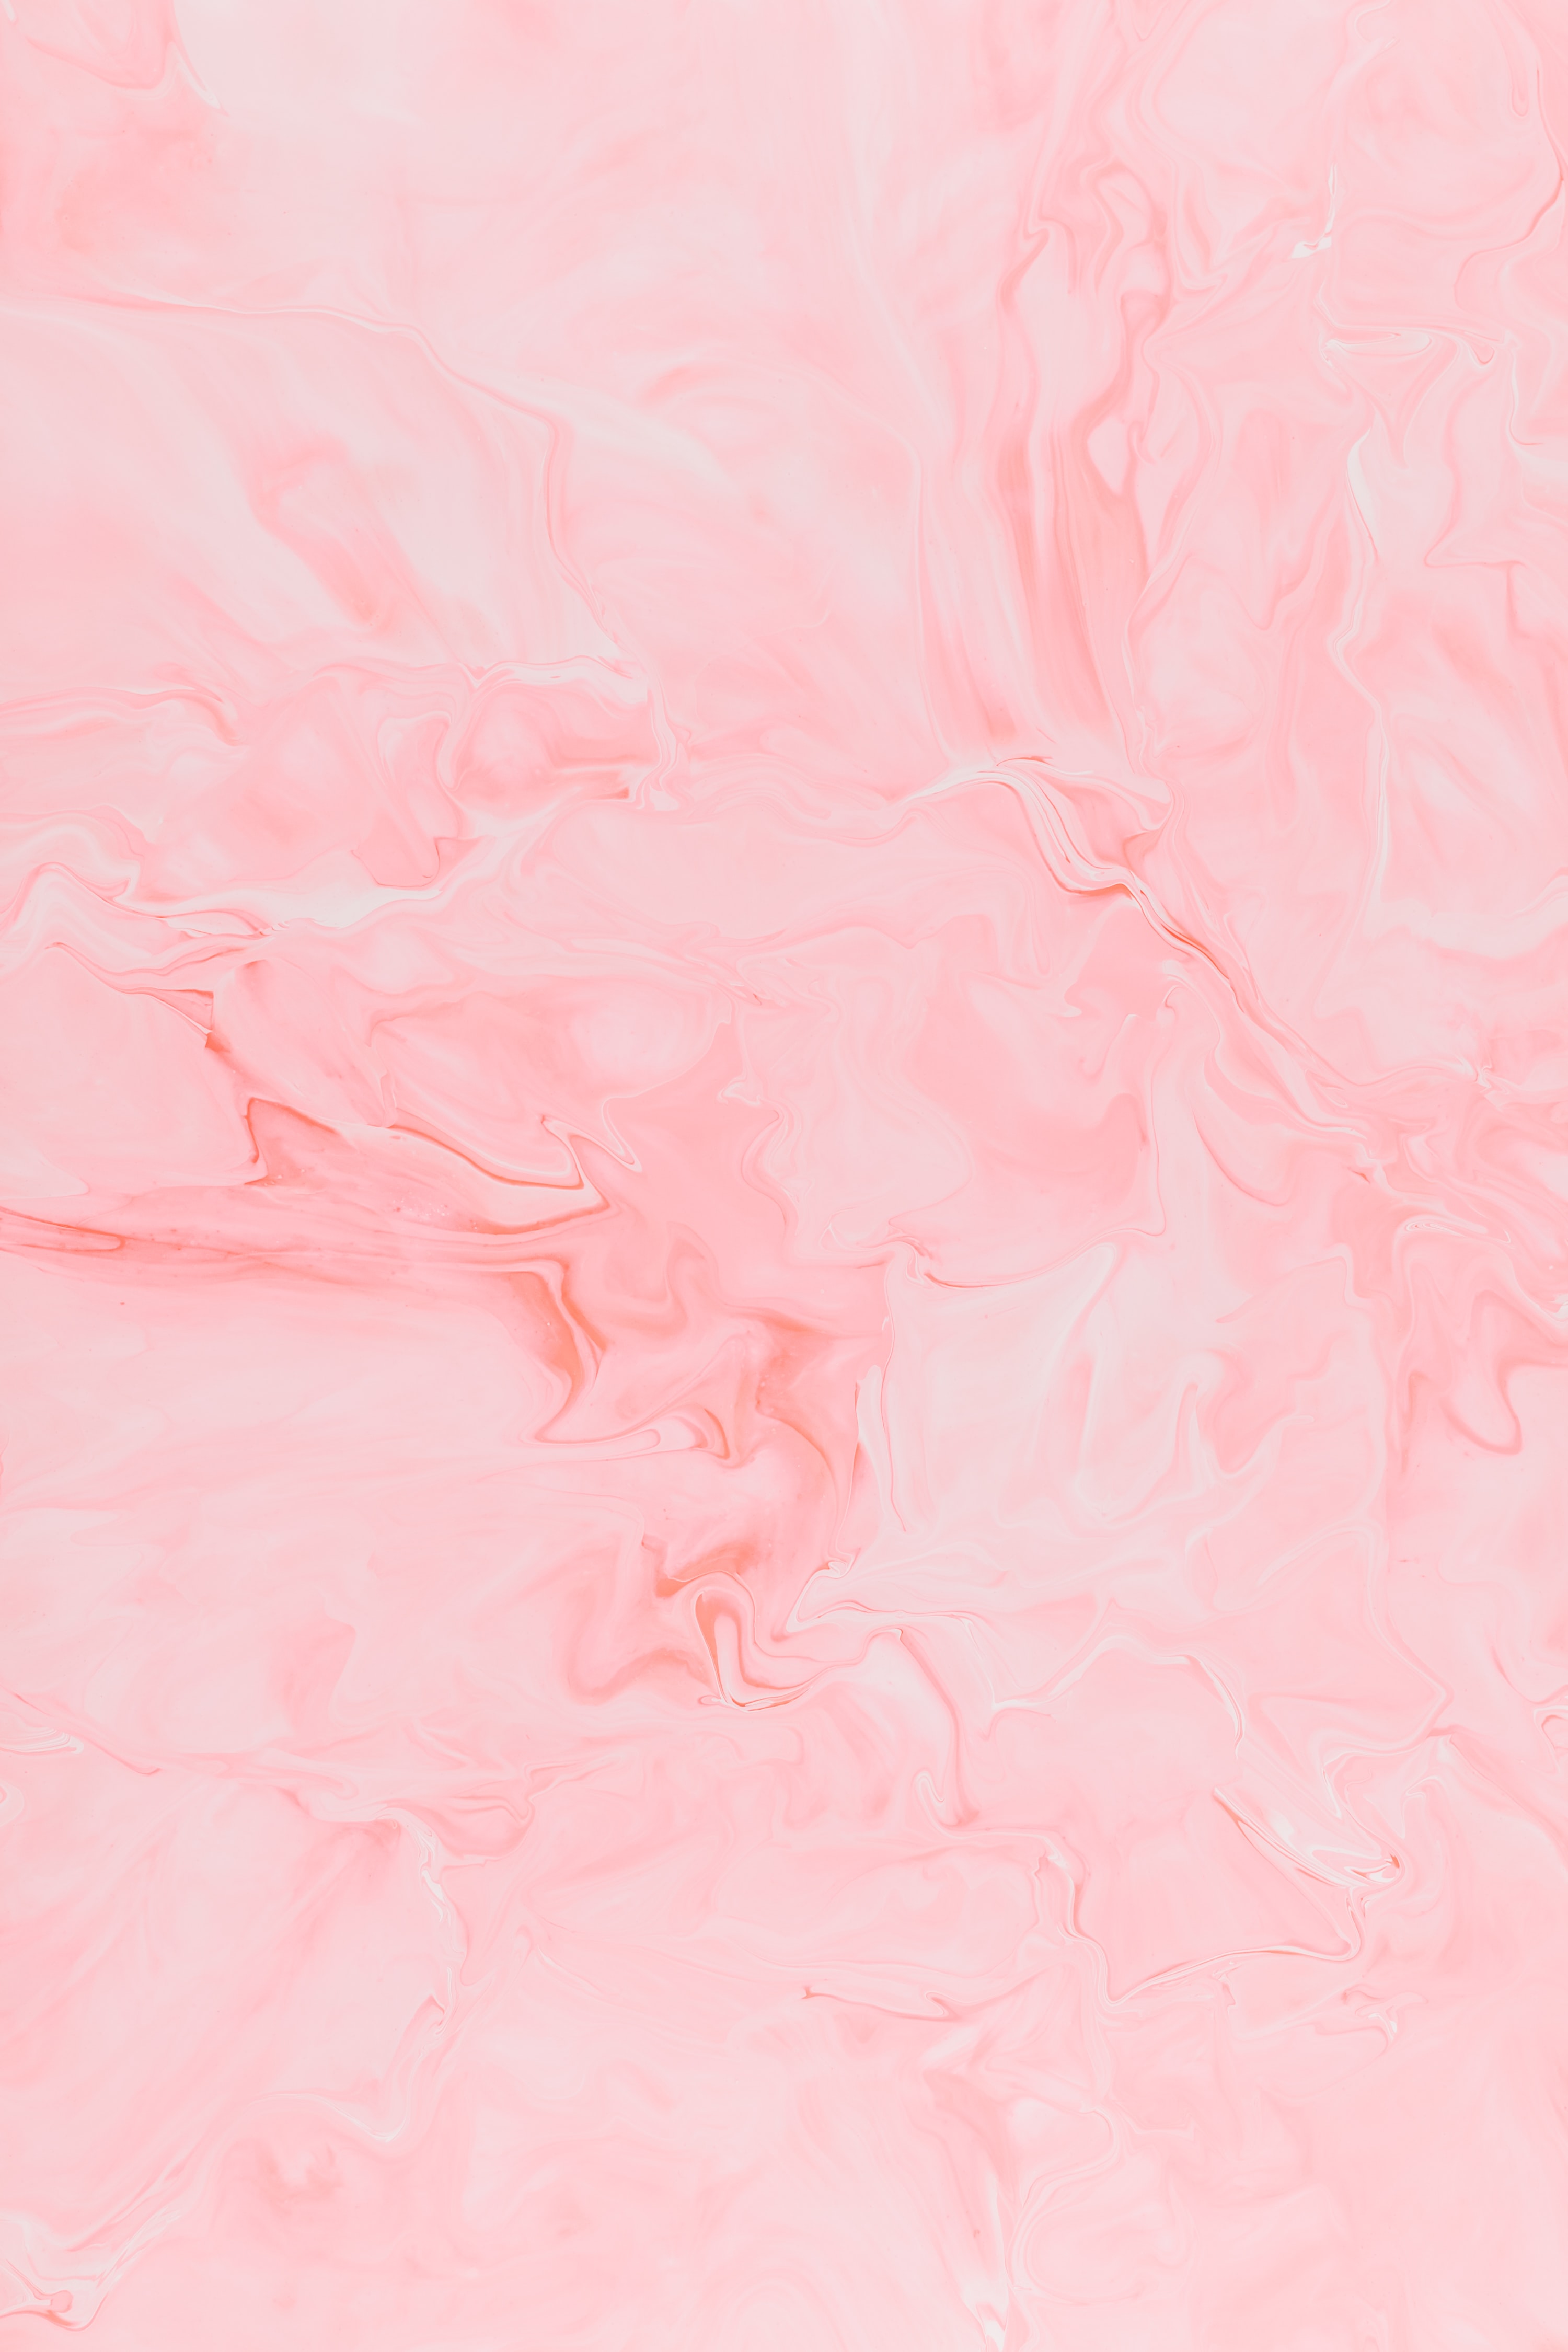 71+ Pink Iphone Wallpaper